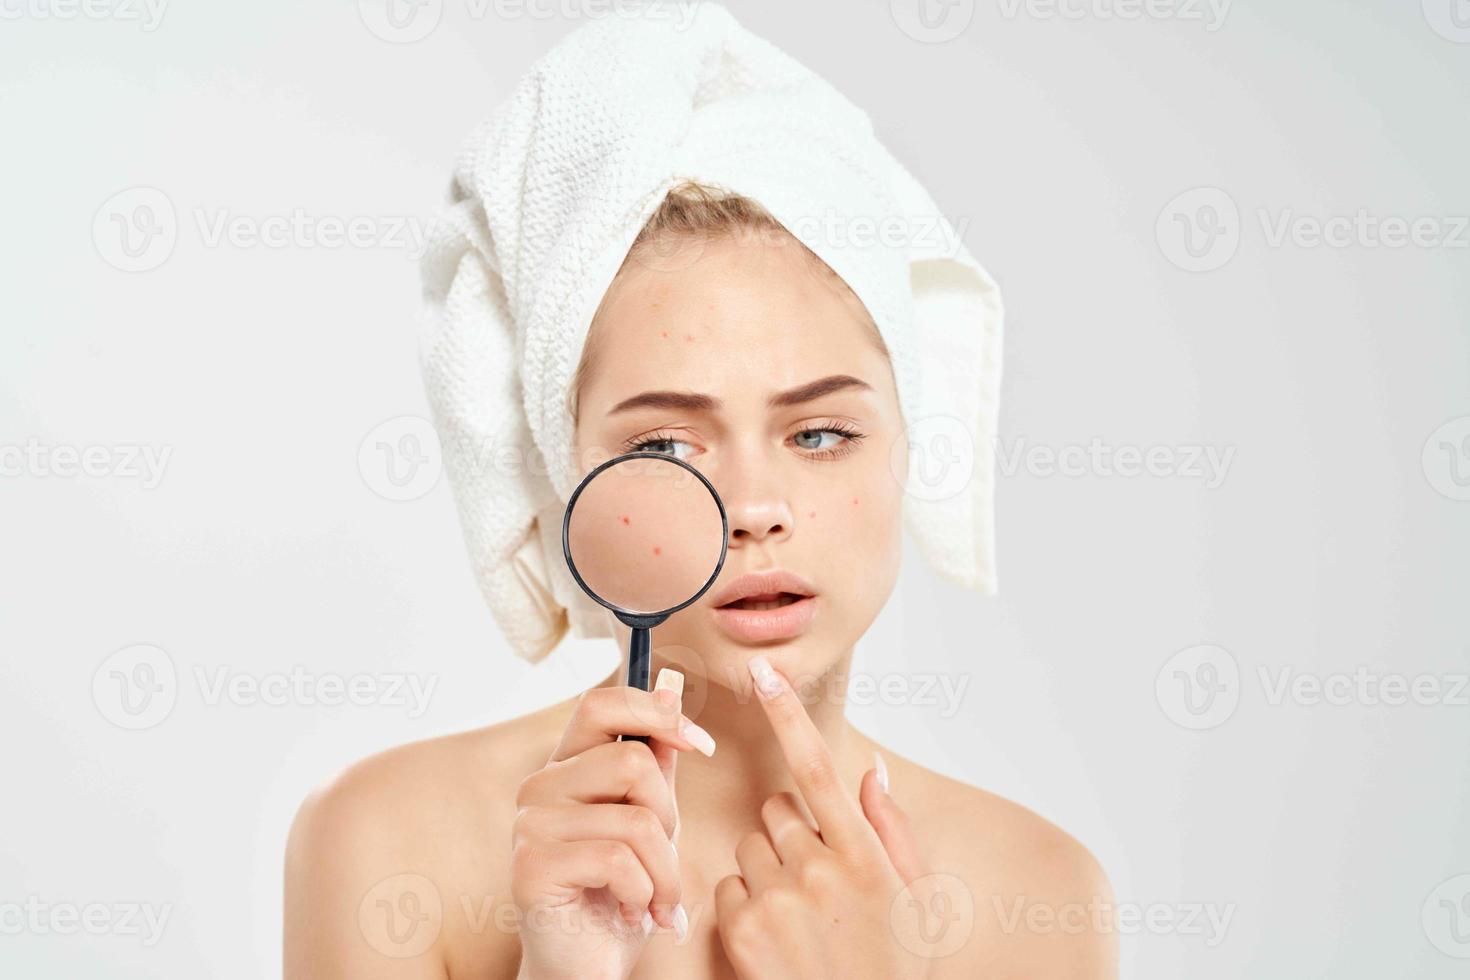 bonita mulher nu ombros lupa perto face dermatologia pele Cuidado foto